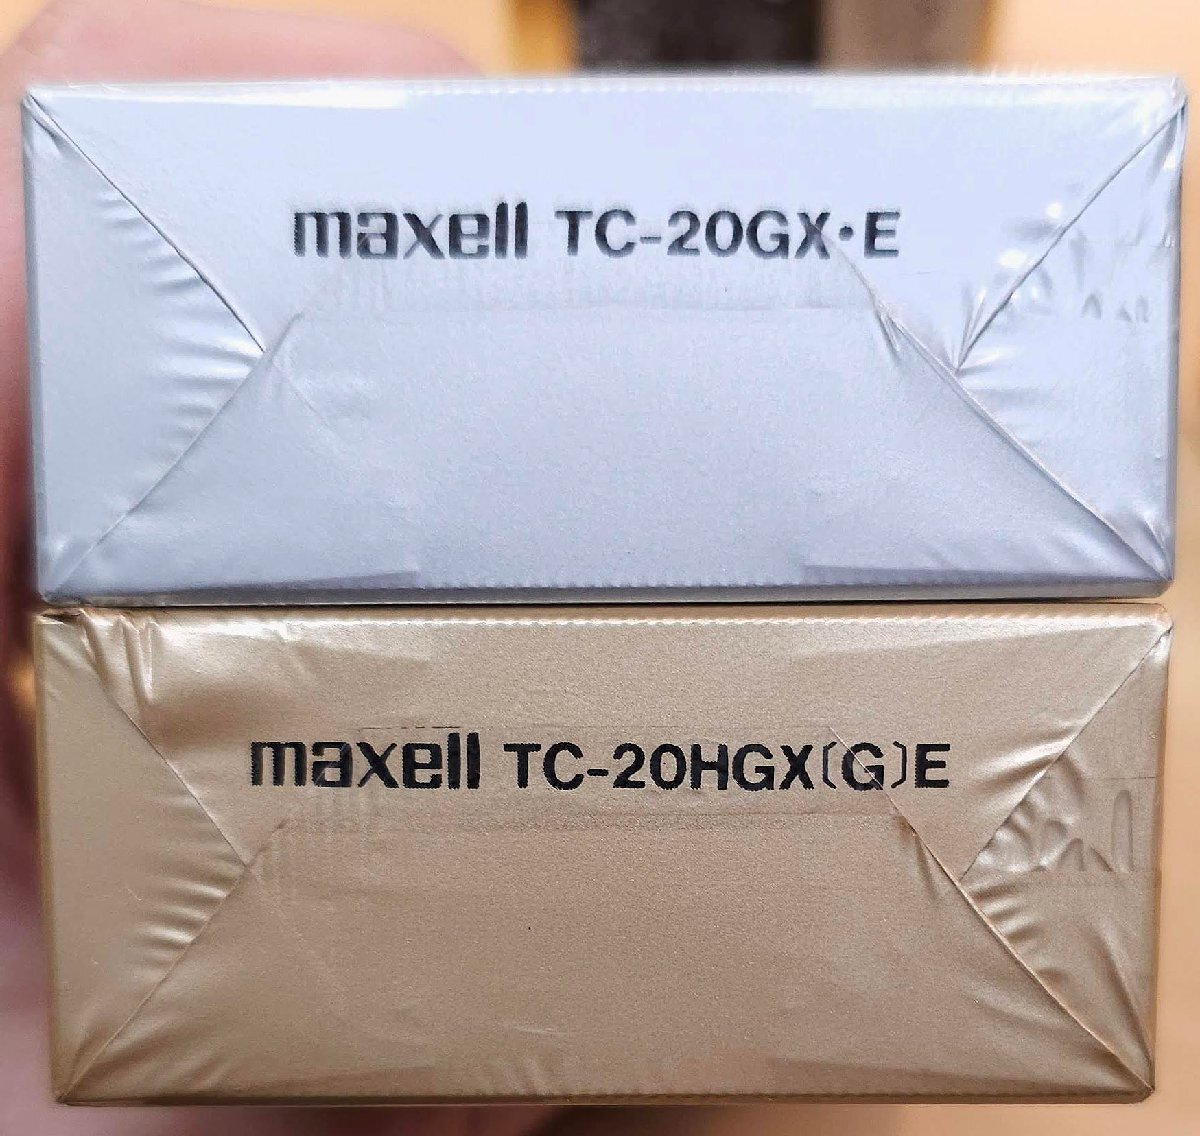  new goods unopened / long-term keeping goods TDK/maxell/Victor TC-30HGF/ST-C30XR(B)/TC-20GX*E/TC-20HGX[G]E/2ST-C30XGB 6 pcs set compact video cassette 